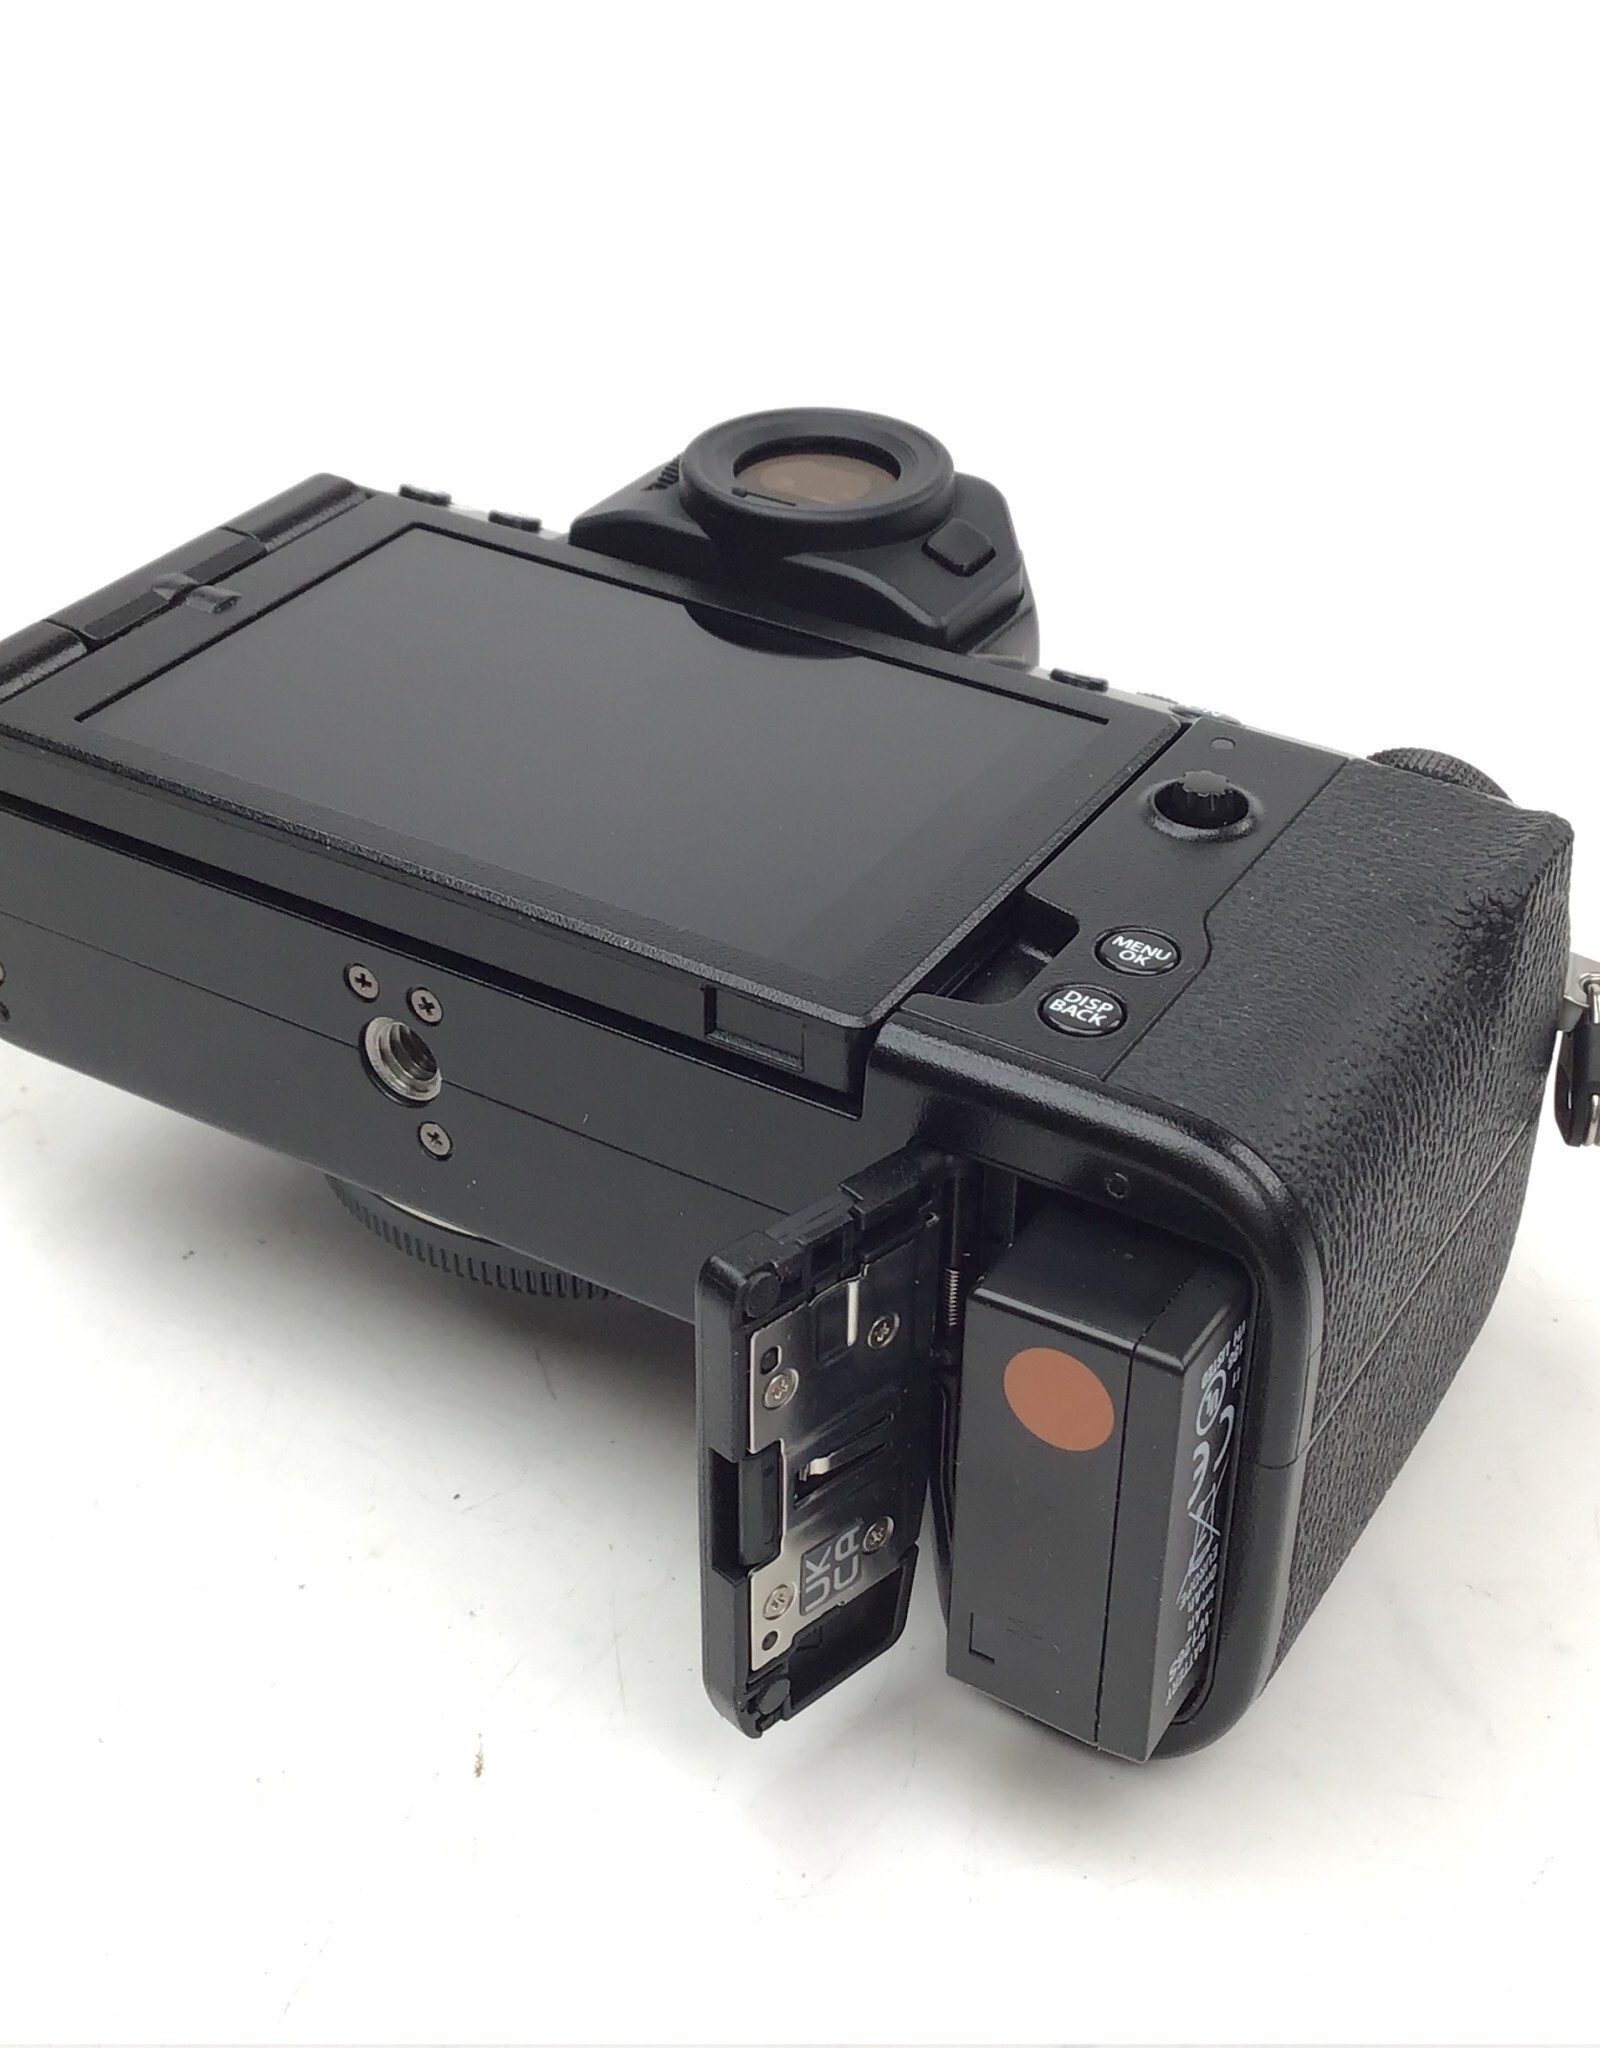 Fujifilm Fujifilm X-S10 Camera Body Shutter Count 1400 Used EX